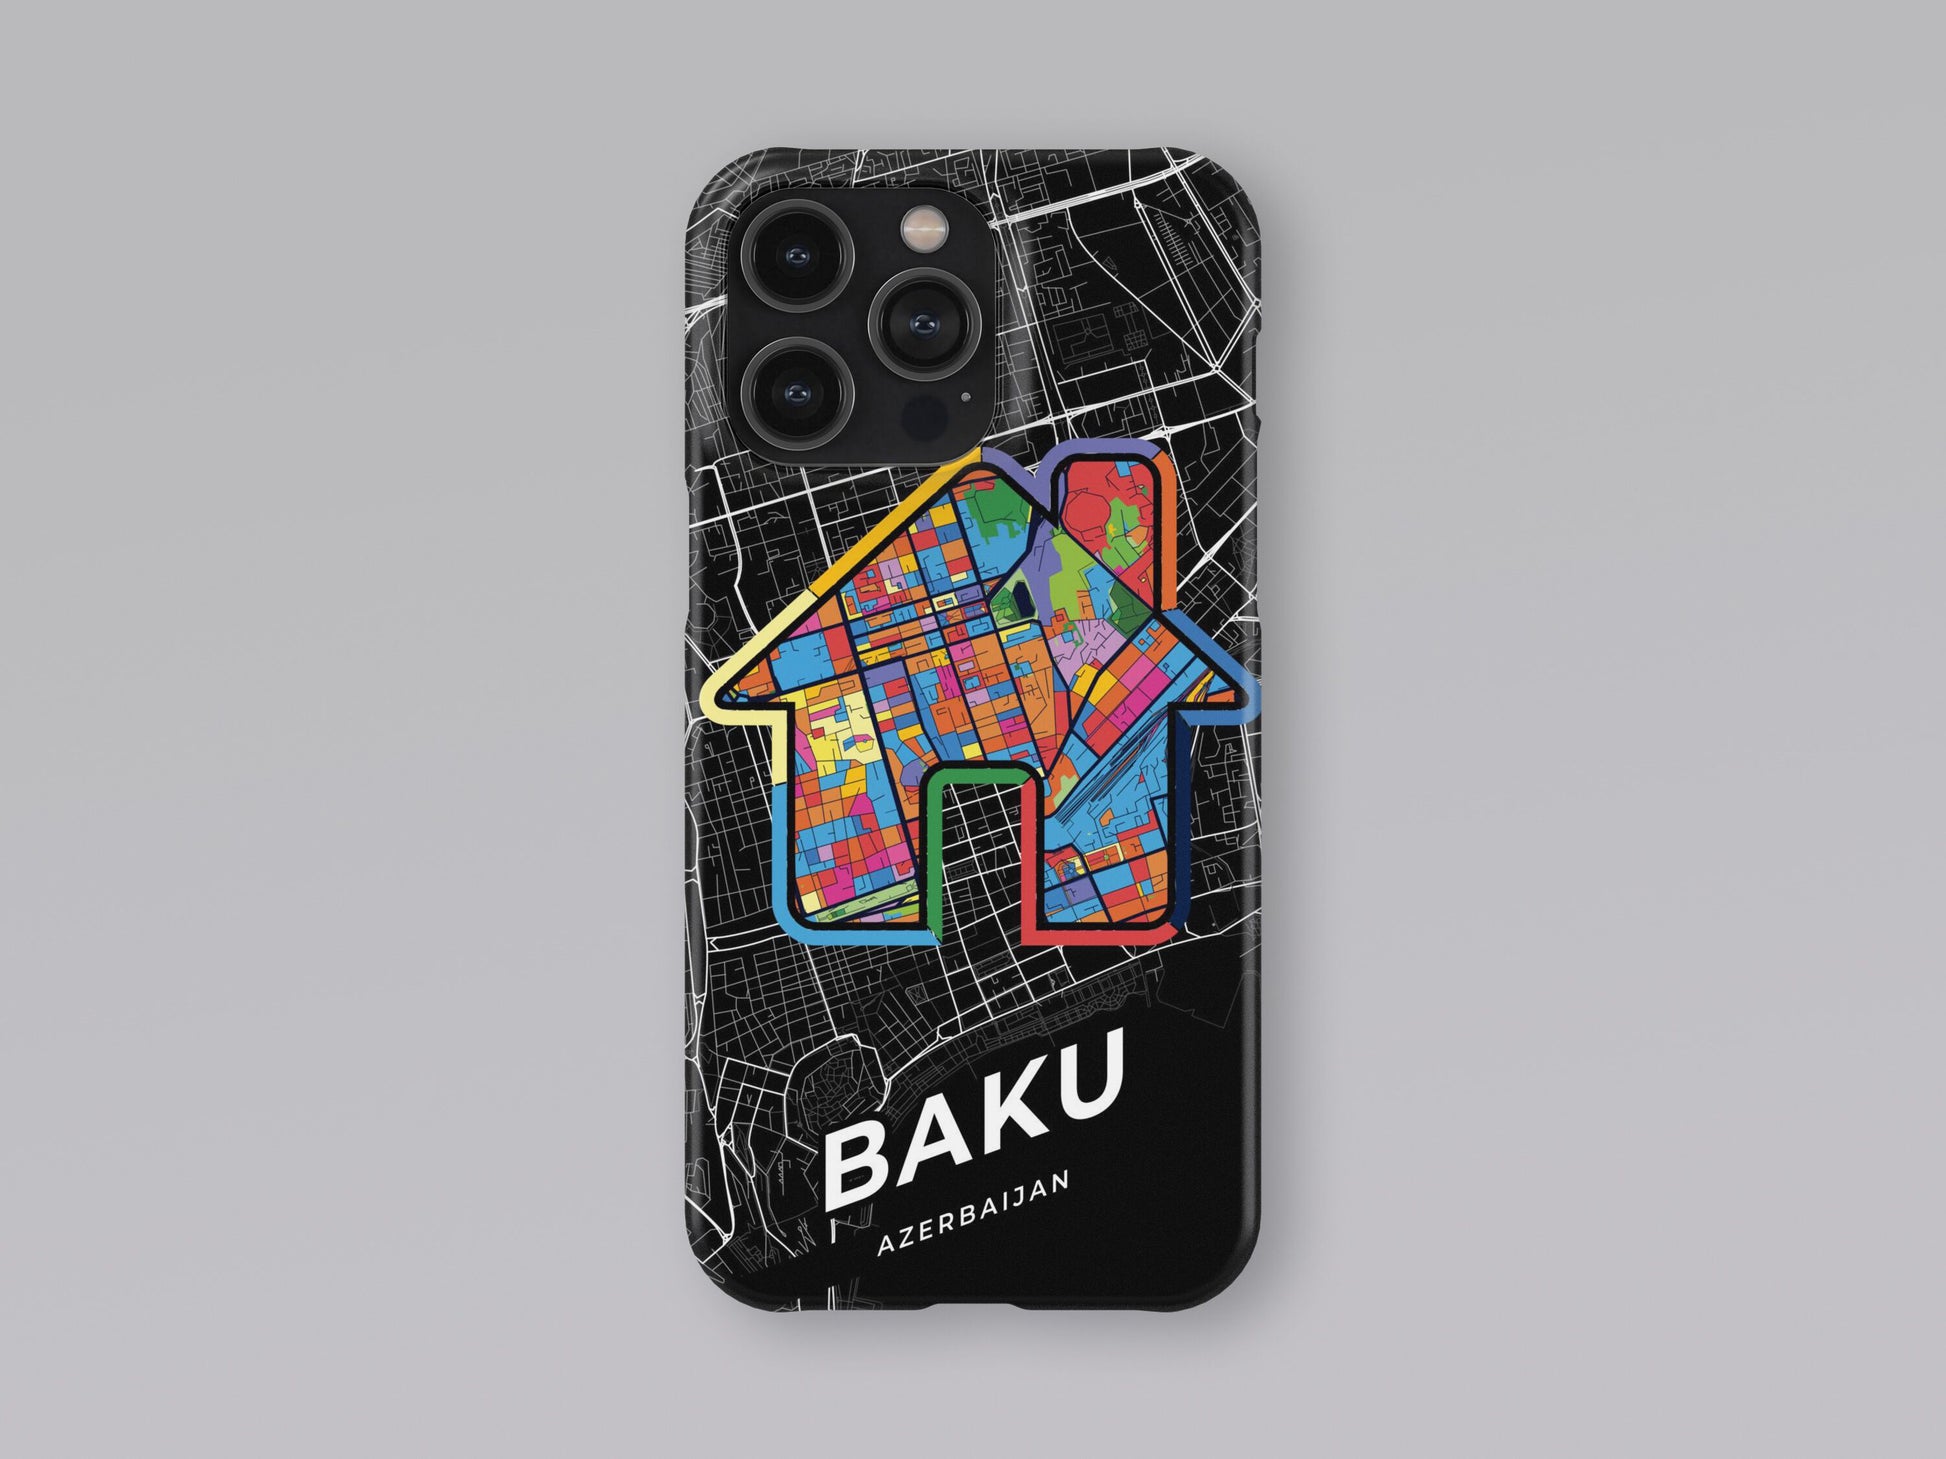 Baku Azerbaijan slim phone case with colorful icon. Birthday, wedding or housewarming gift. Couple match cases. 3